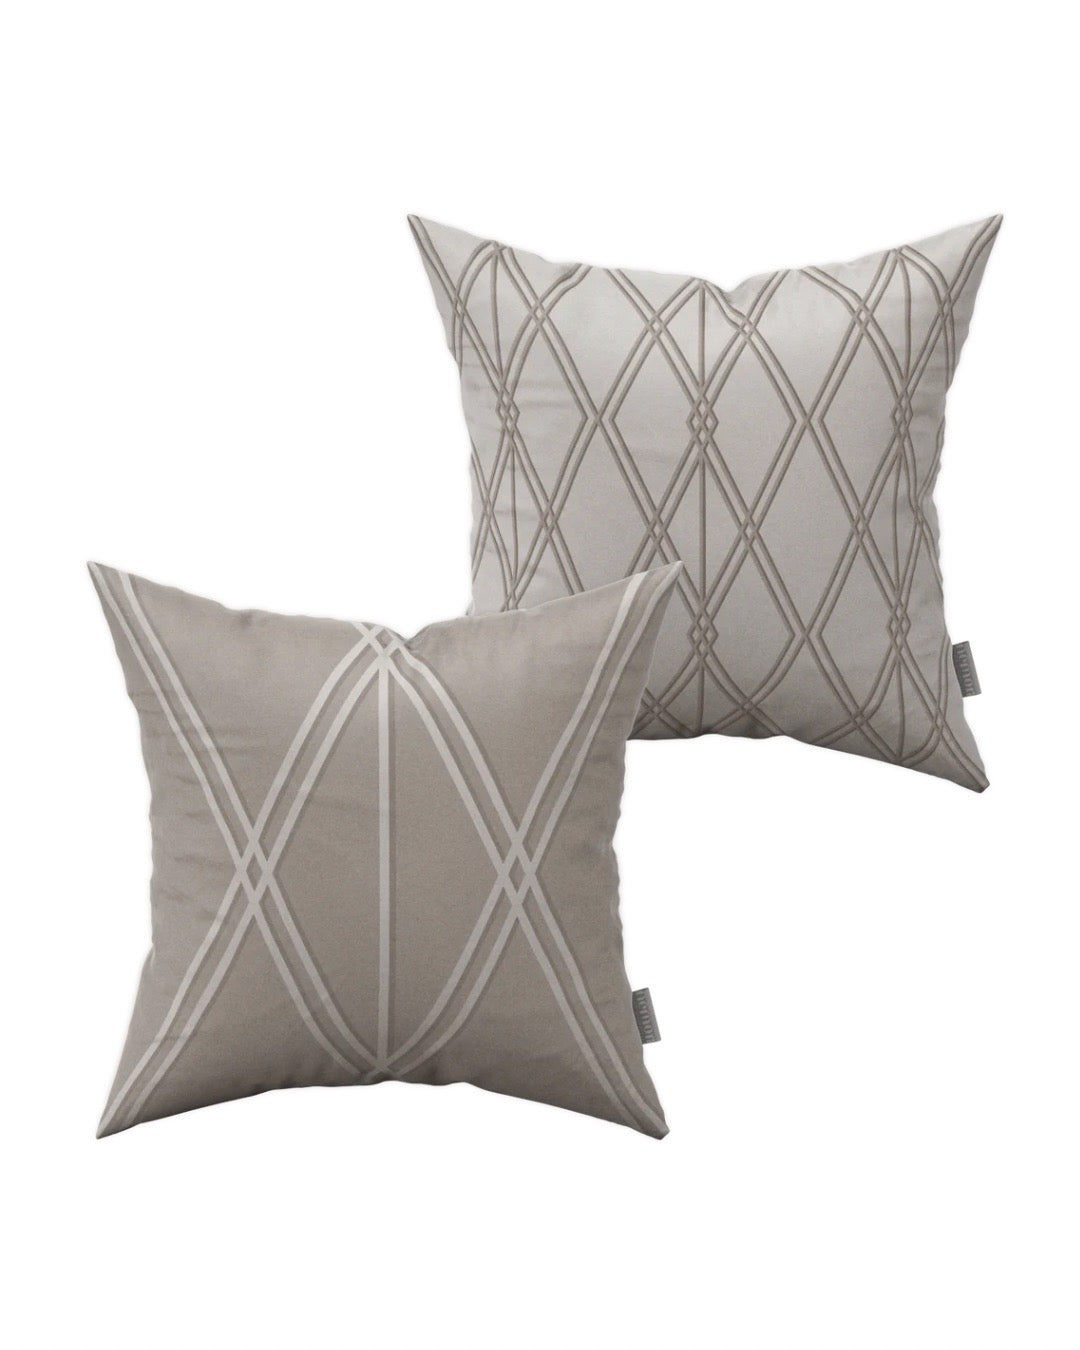 Alpin Greige Pillows - Set of 2